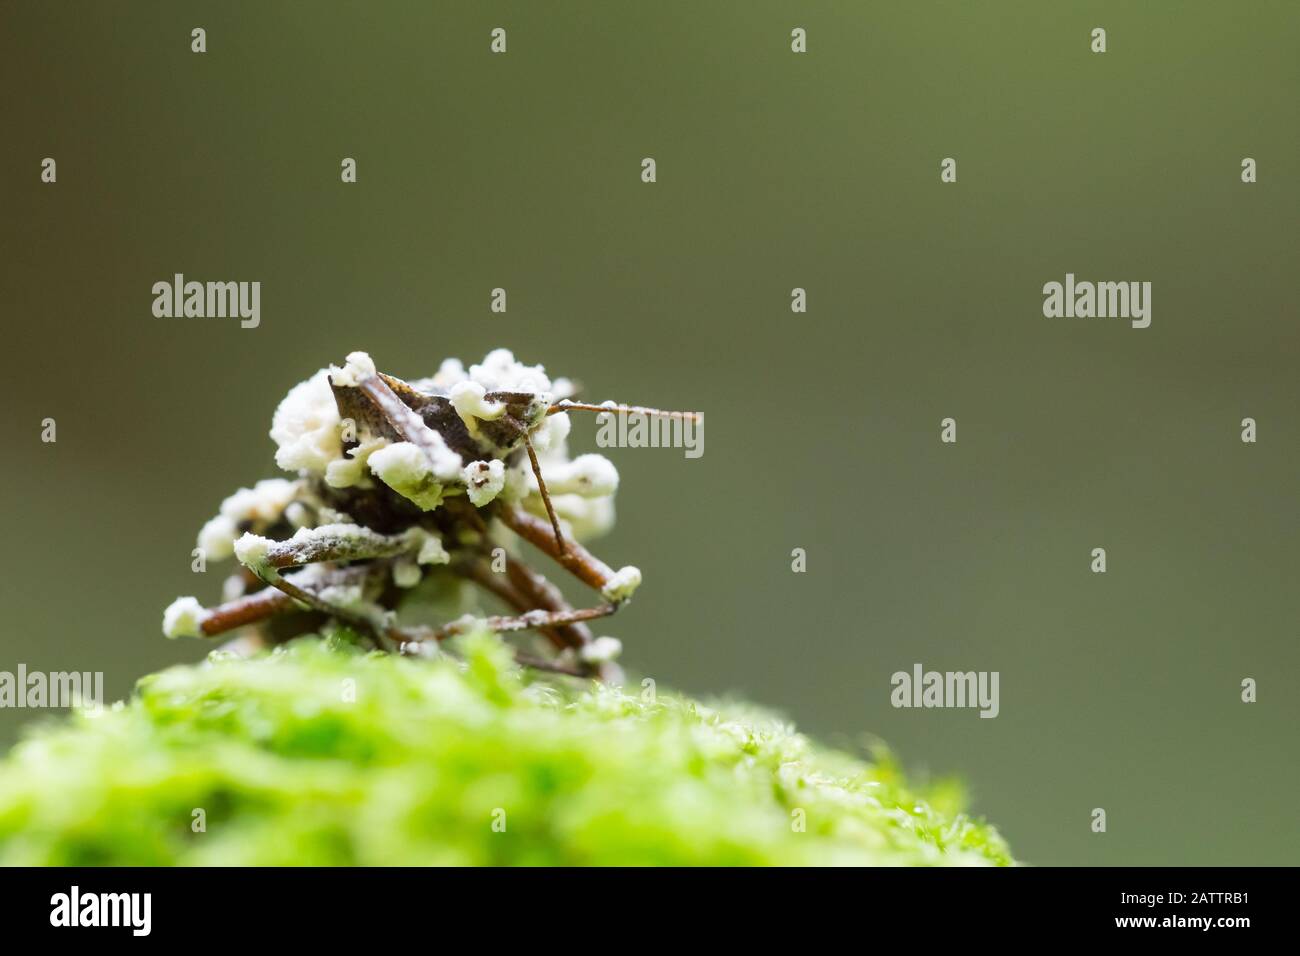 White muscardine fungi on a shield-bug Stock Photo